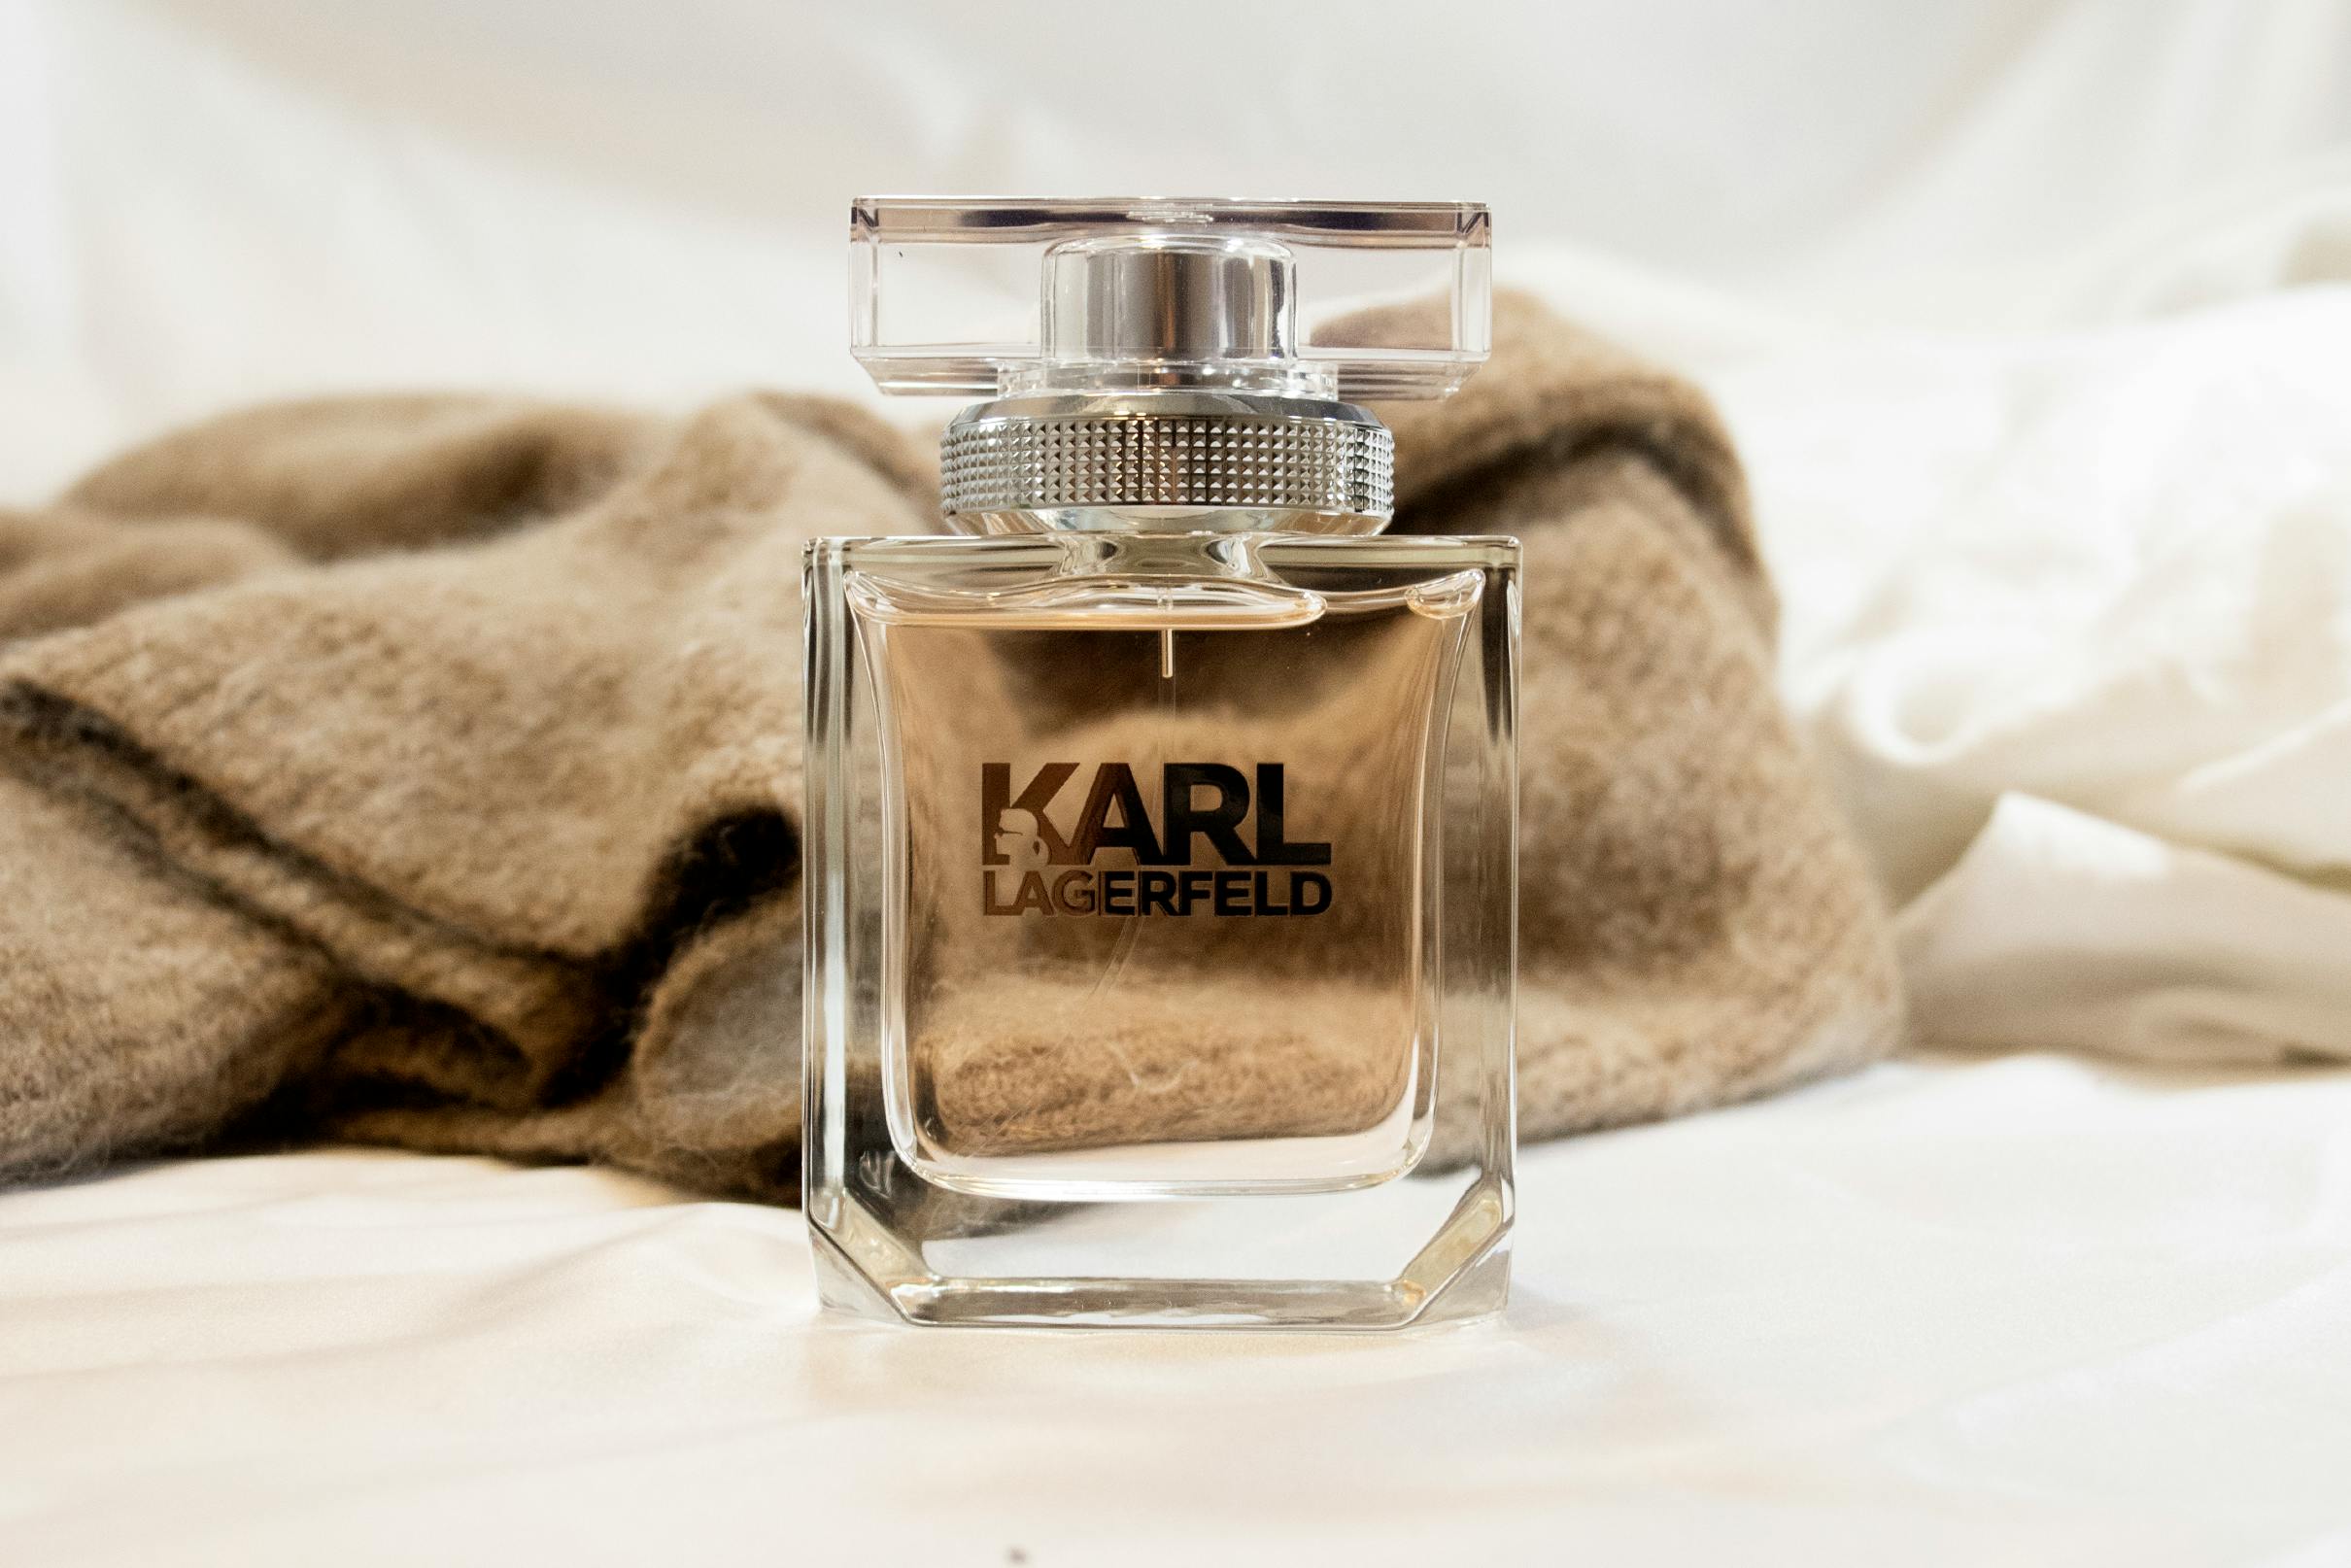 Karl lagerfeld parfume